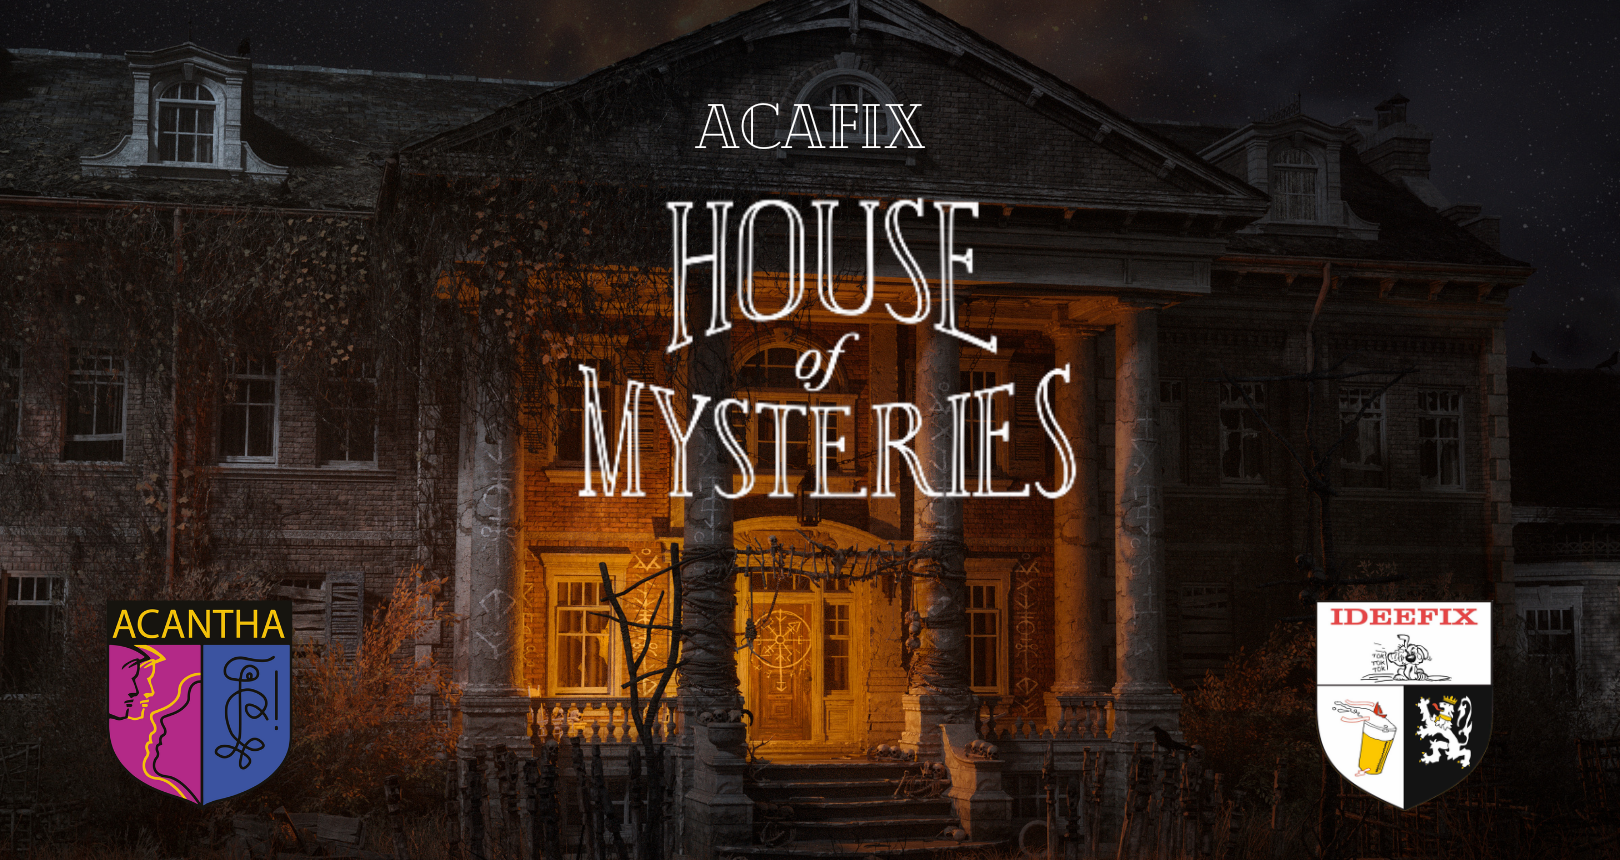 Acafix House of Mysteries